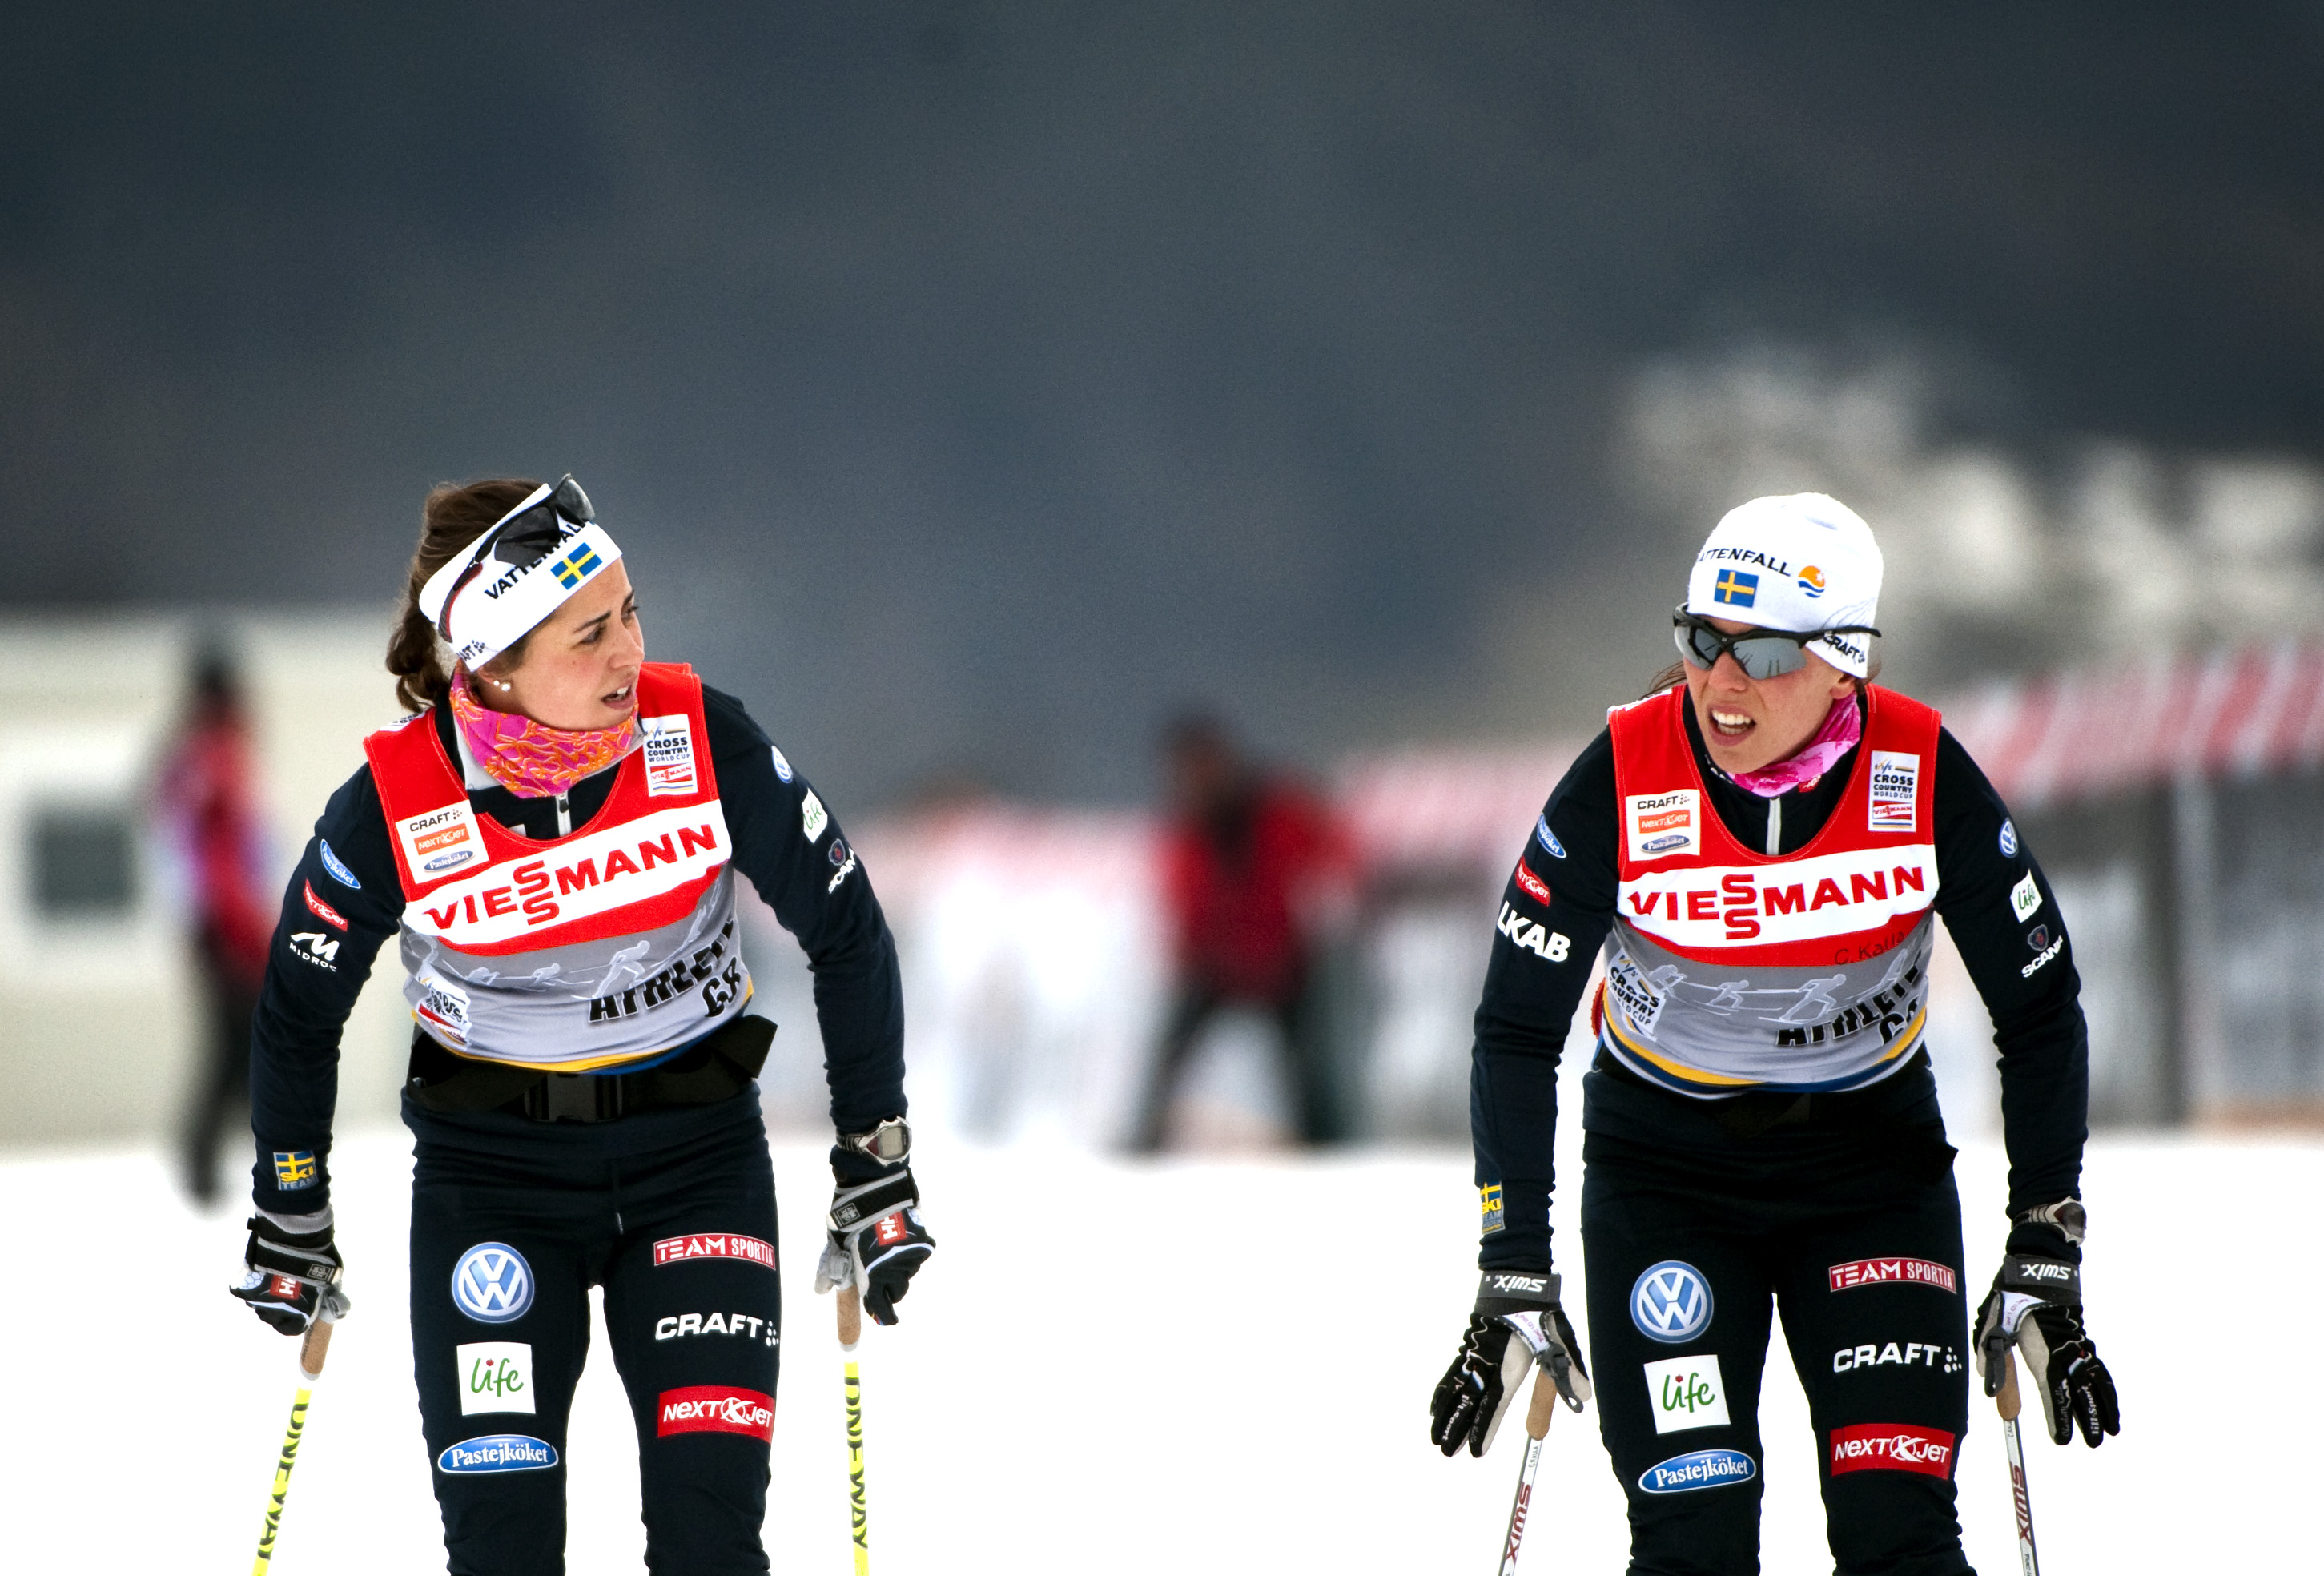 Anna Haag, Tour de Ski, Langdskidakning, skidor, Charlotte Kalla